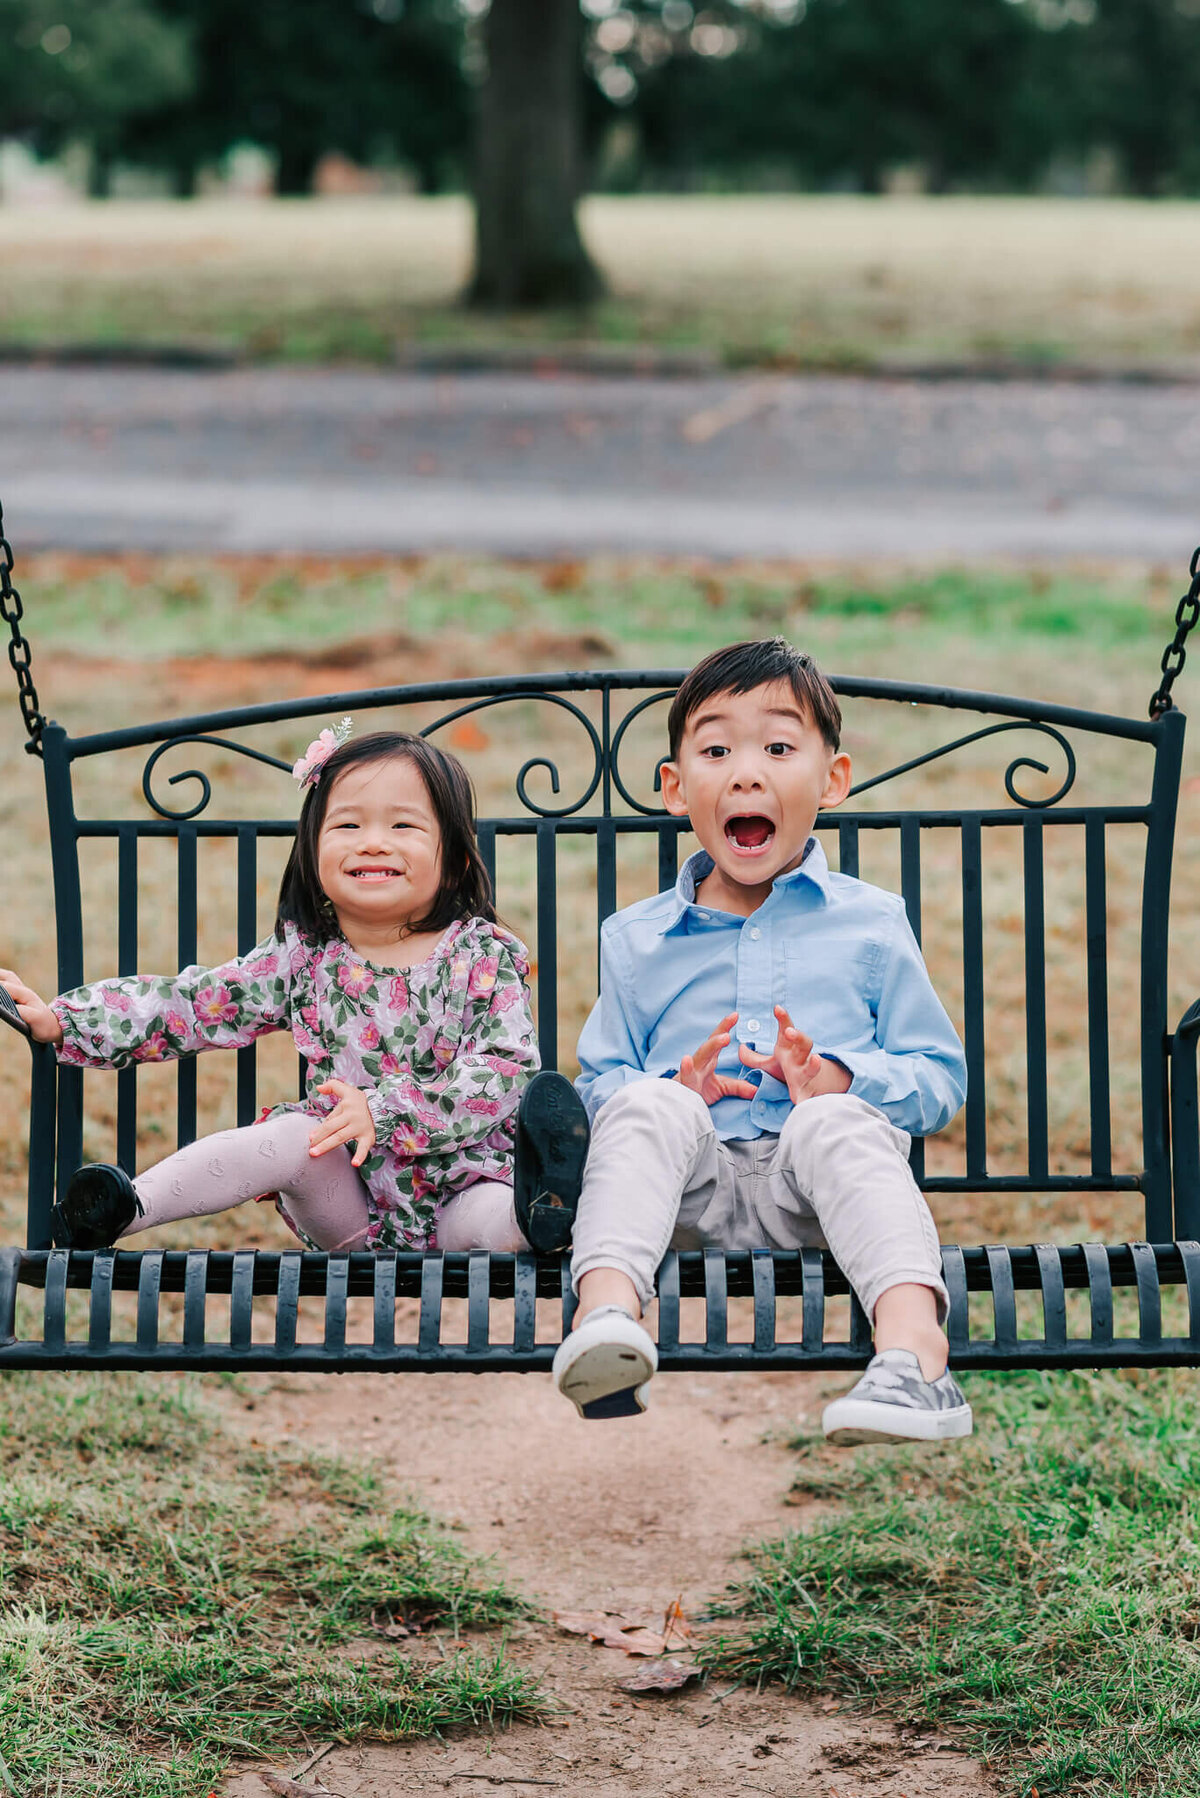 Children showing exuberance sitting on a swinging bench together